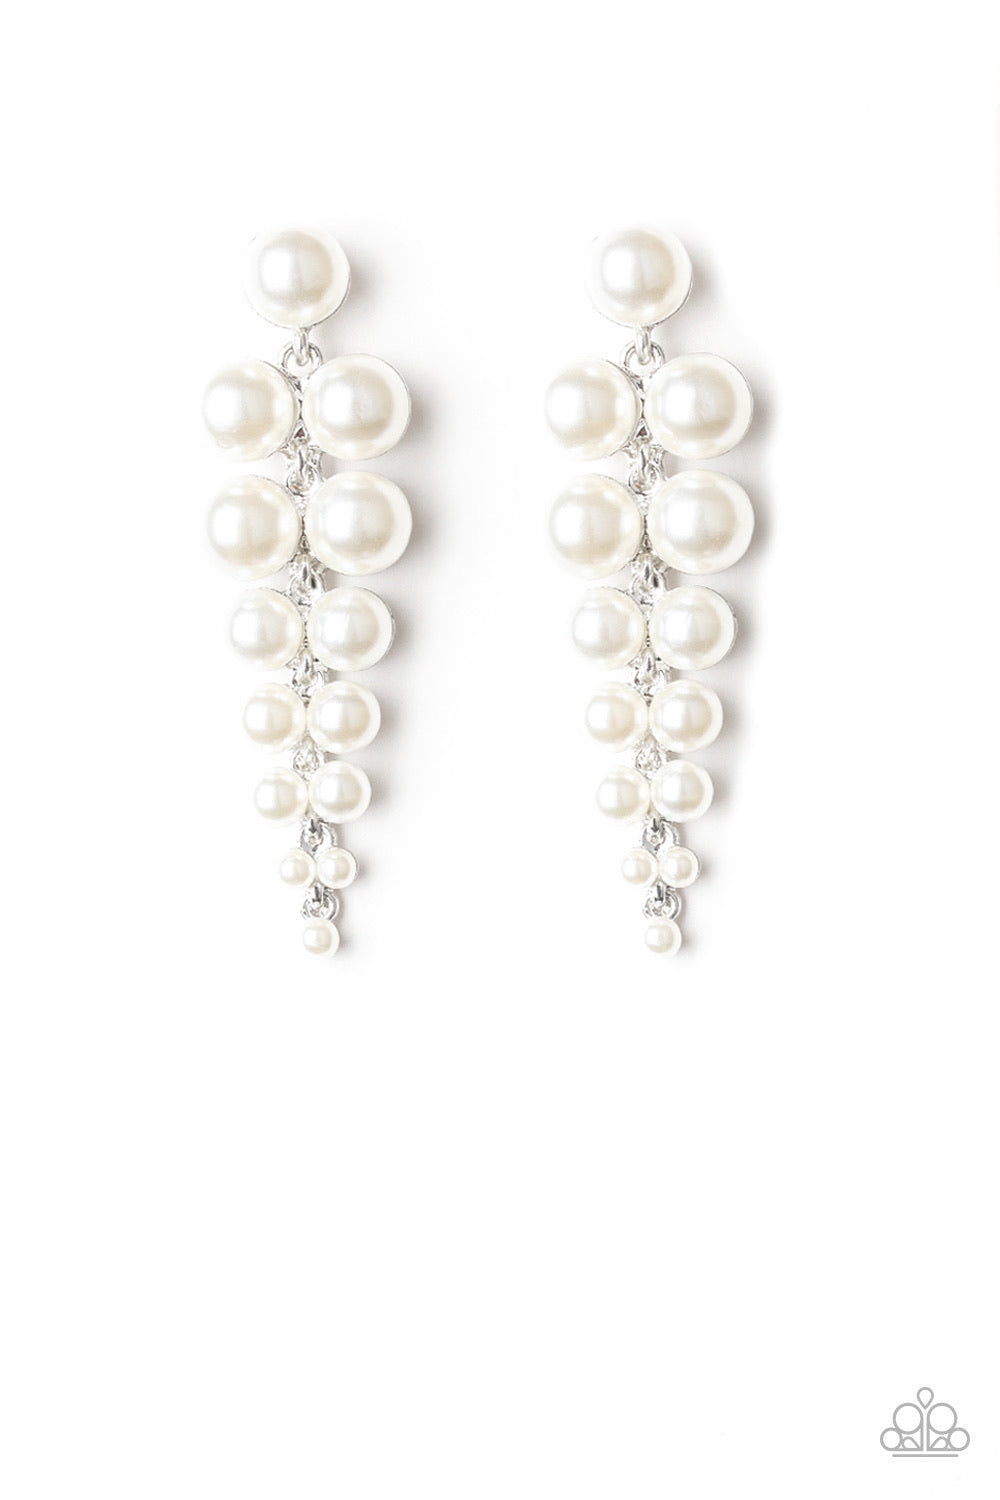 Totally Tribeca - White Earrings - Paparazzi Accessories - Paparazzi Accessories 